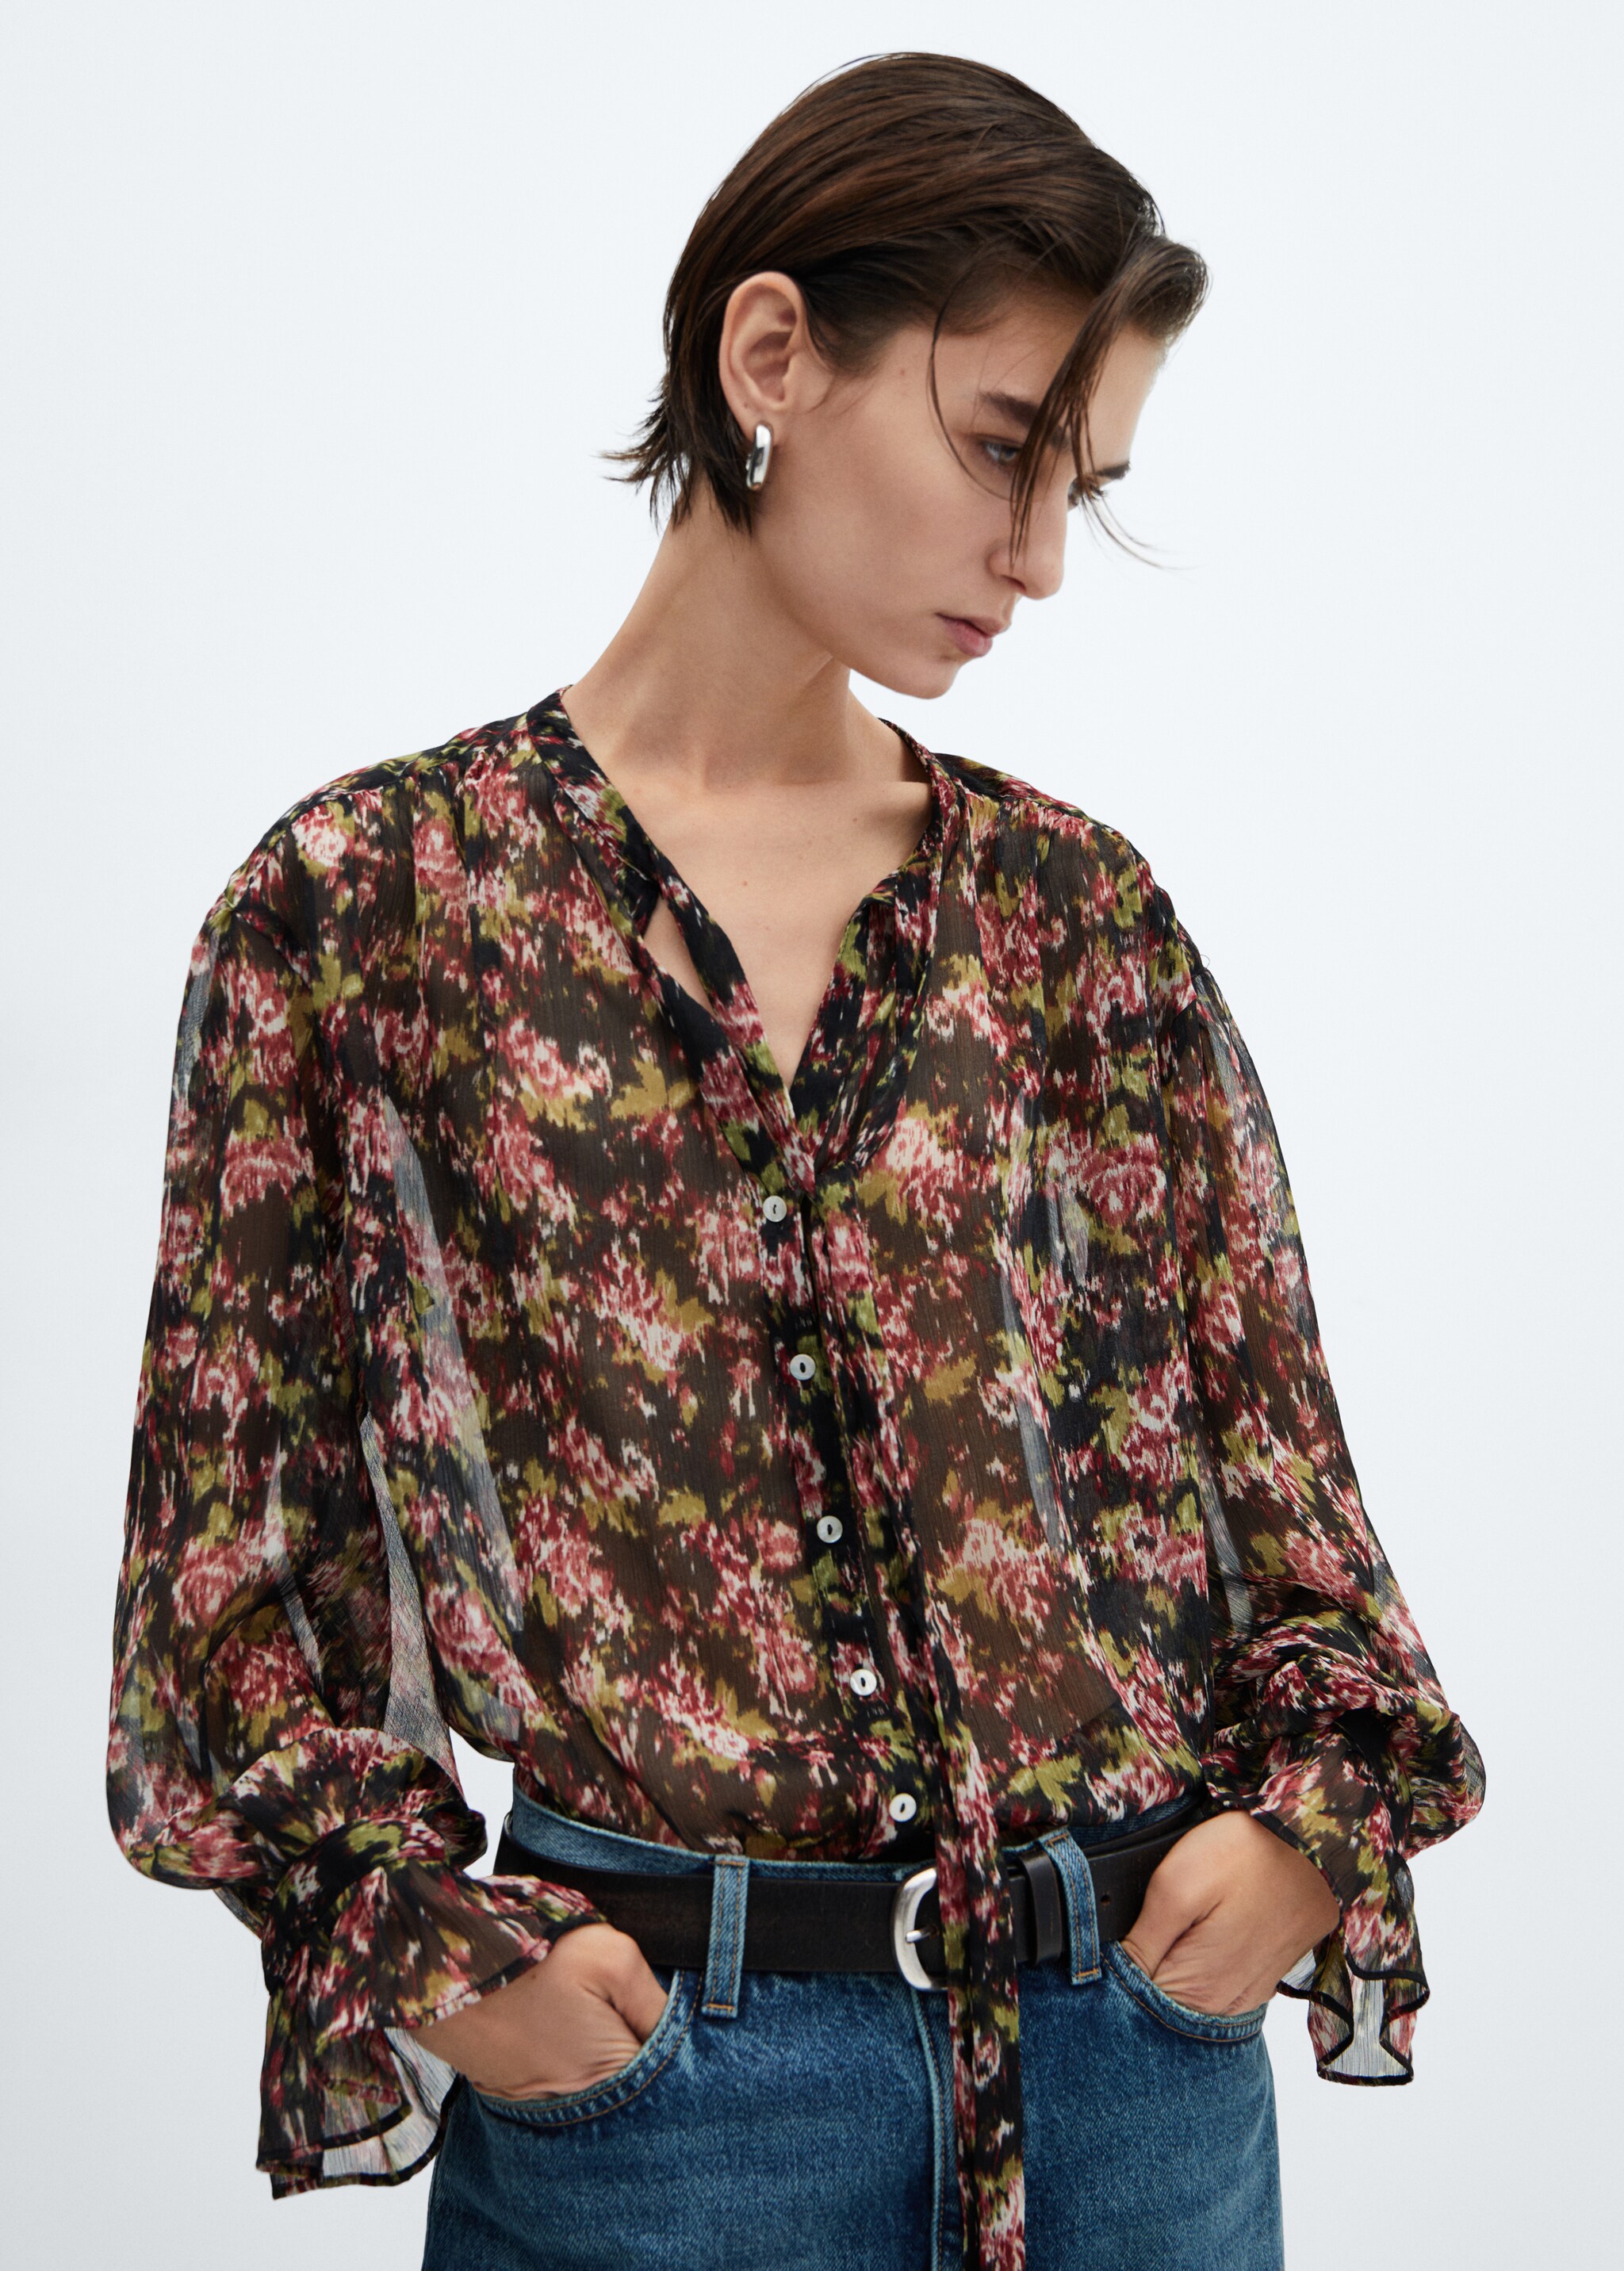 Semi-transparent floral blouse - Medium plane